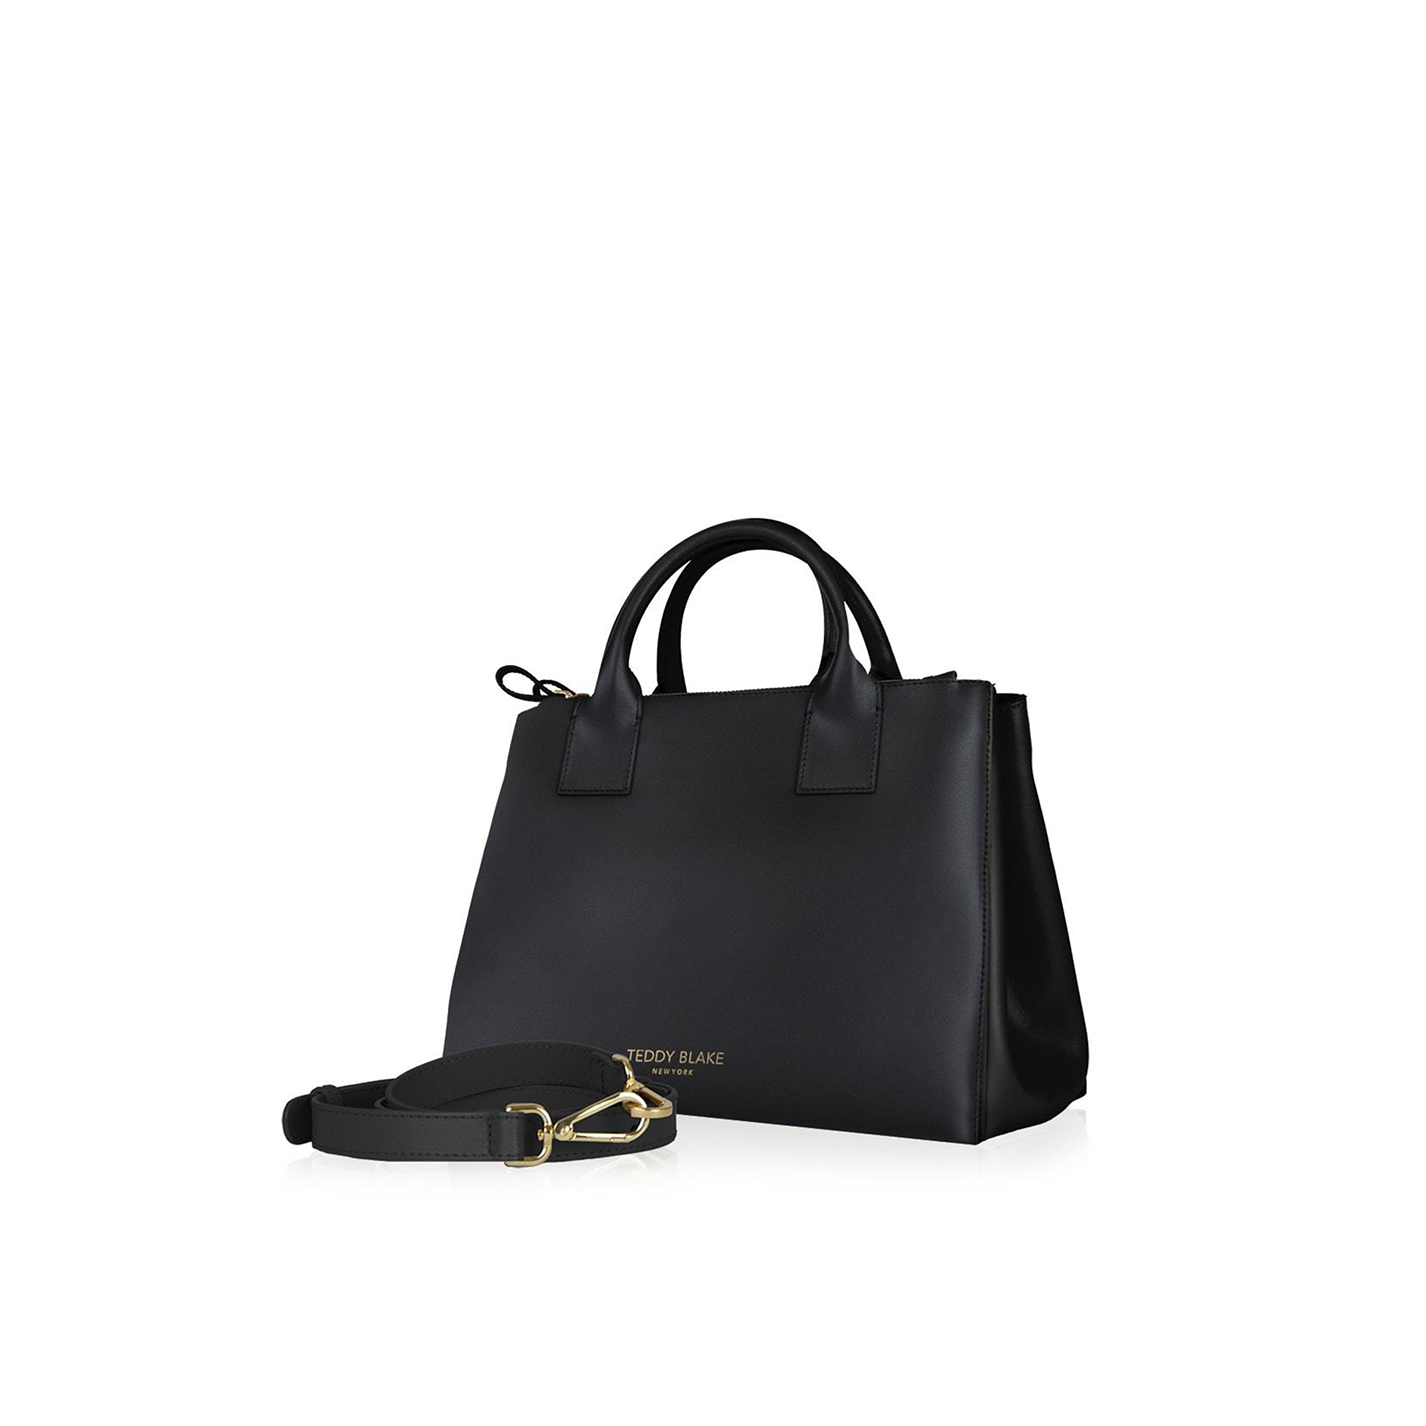 bella-vitello-12-black-leather-bag-with-handle